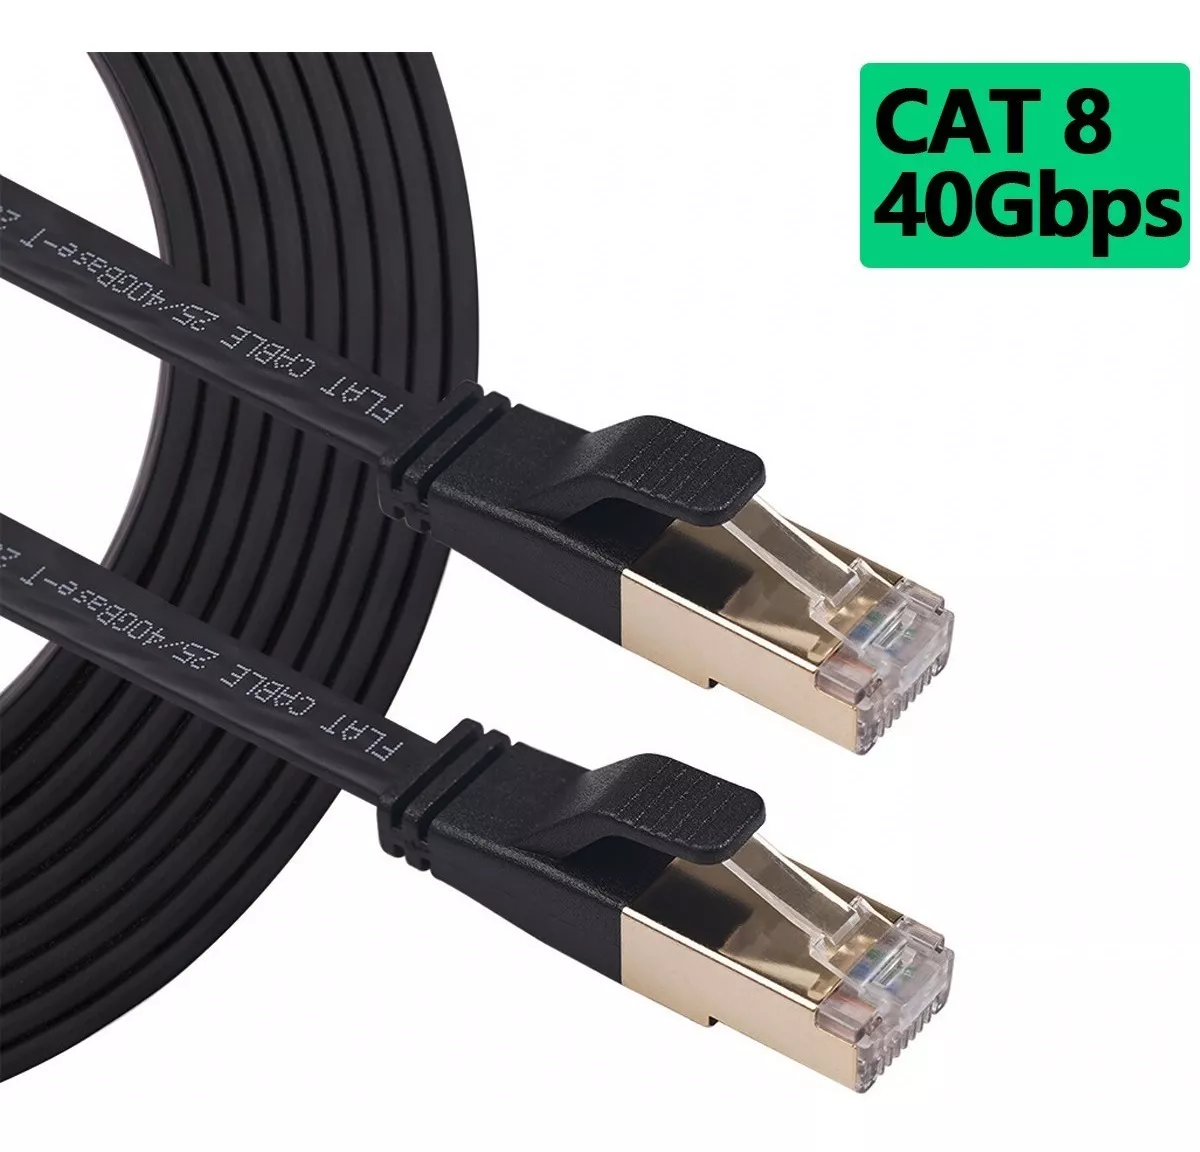 Cable Rojo Plano Categoría 8 Cat8 Rj45 Utp Ethernet 1m 40gbp